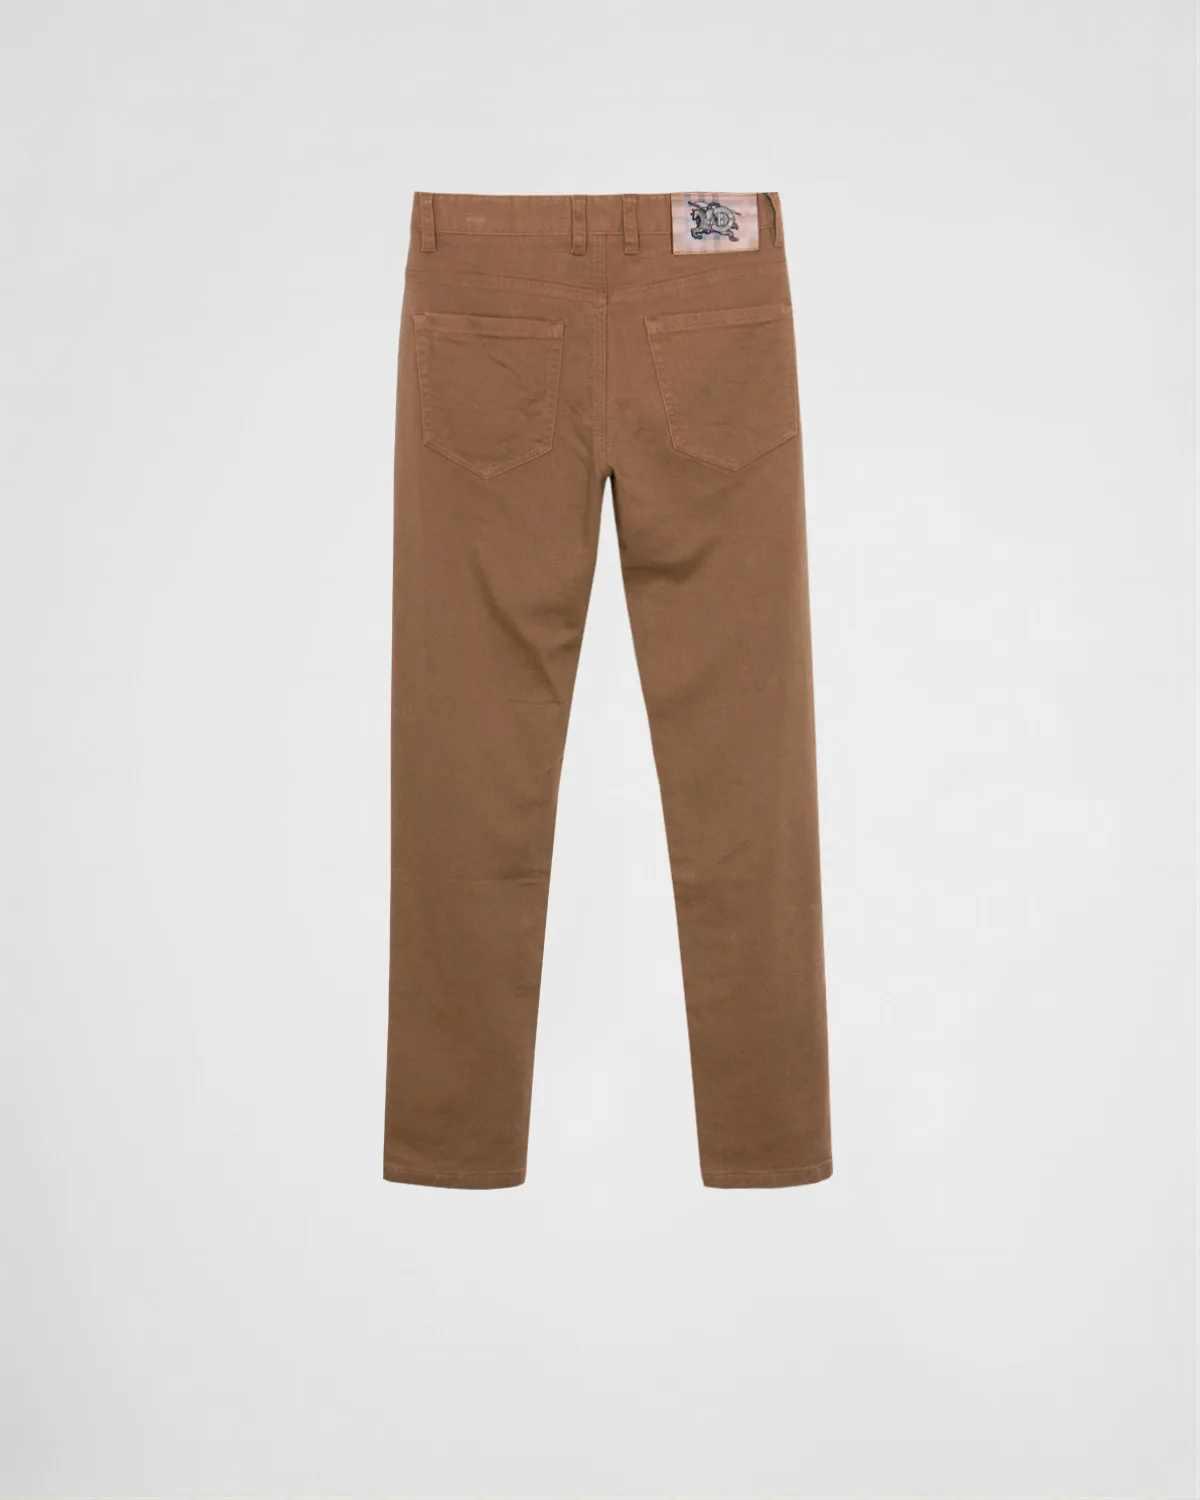 Custom Logo Print High Quality Autumn Mens Solid Color Denim Jeans High Quality Men Denim Pants